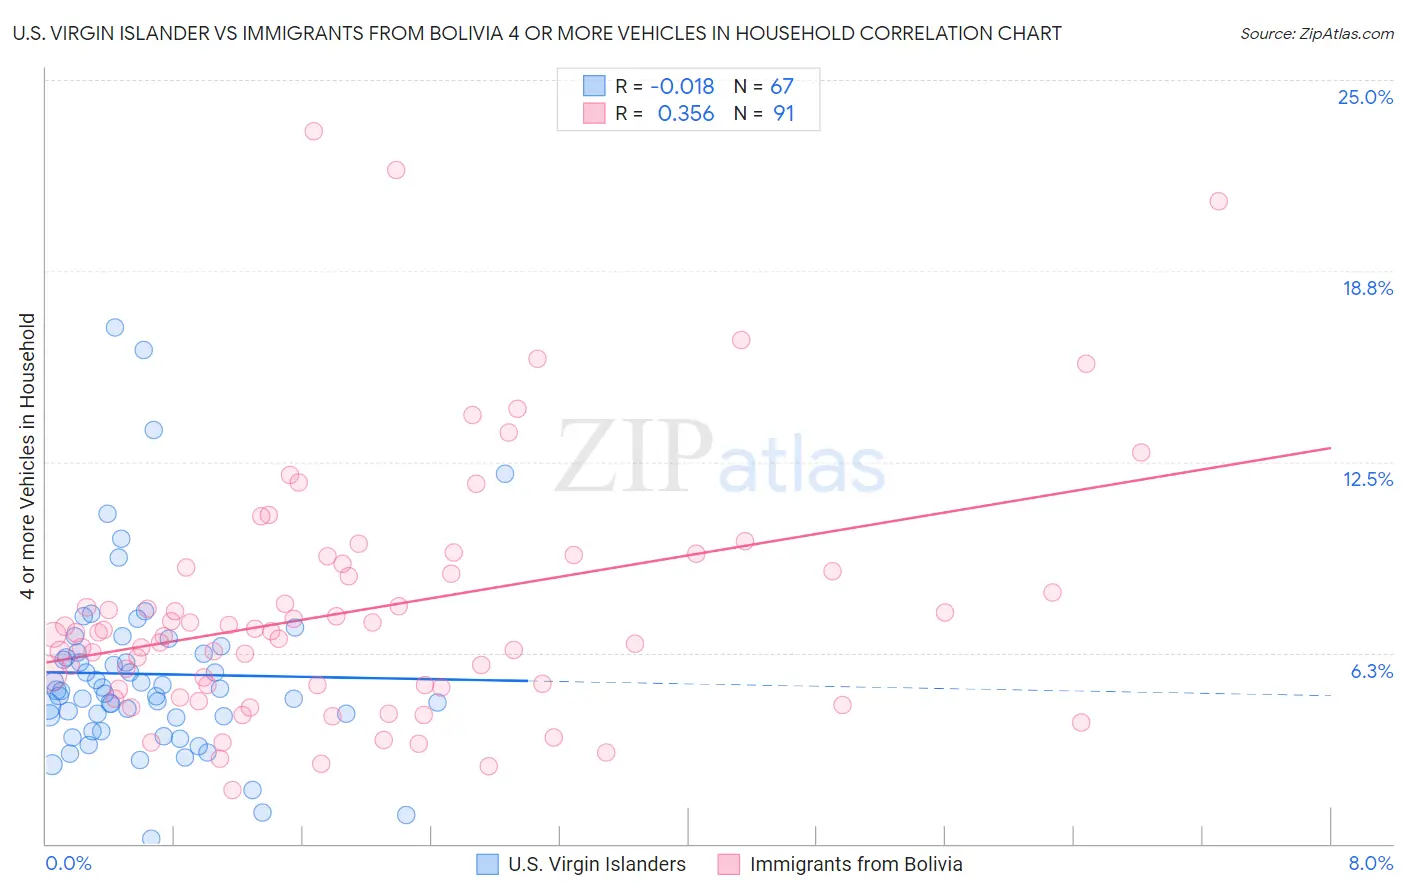 U.S. Virgin Islander vs Immigrants from Bolivia 4 or more Vehicles in Household